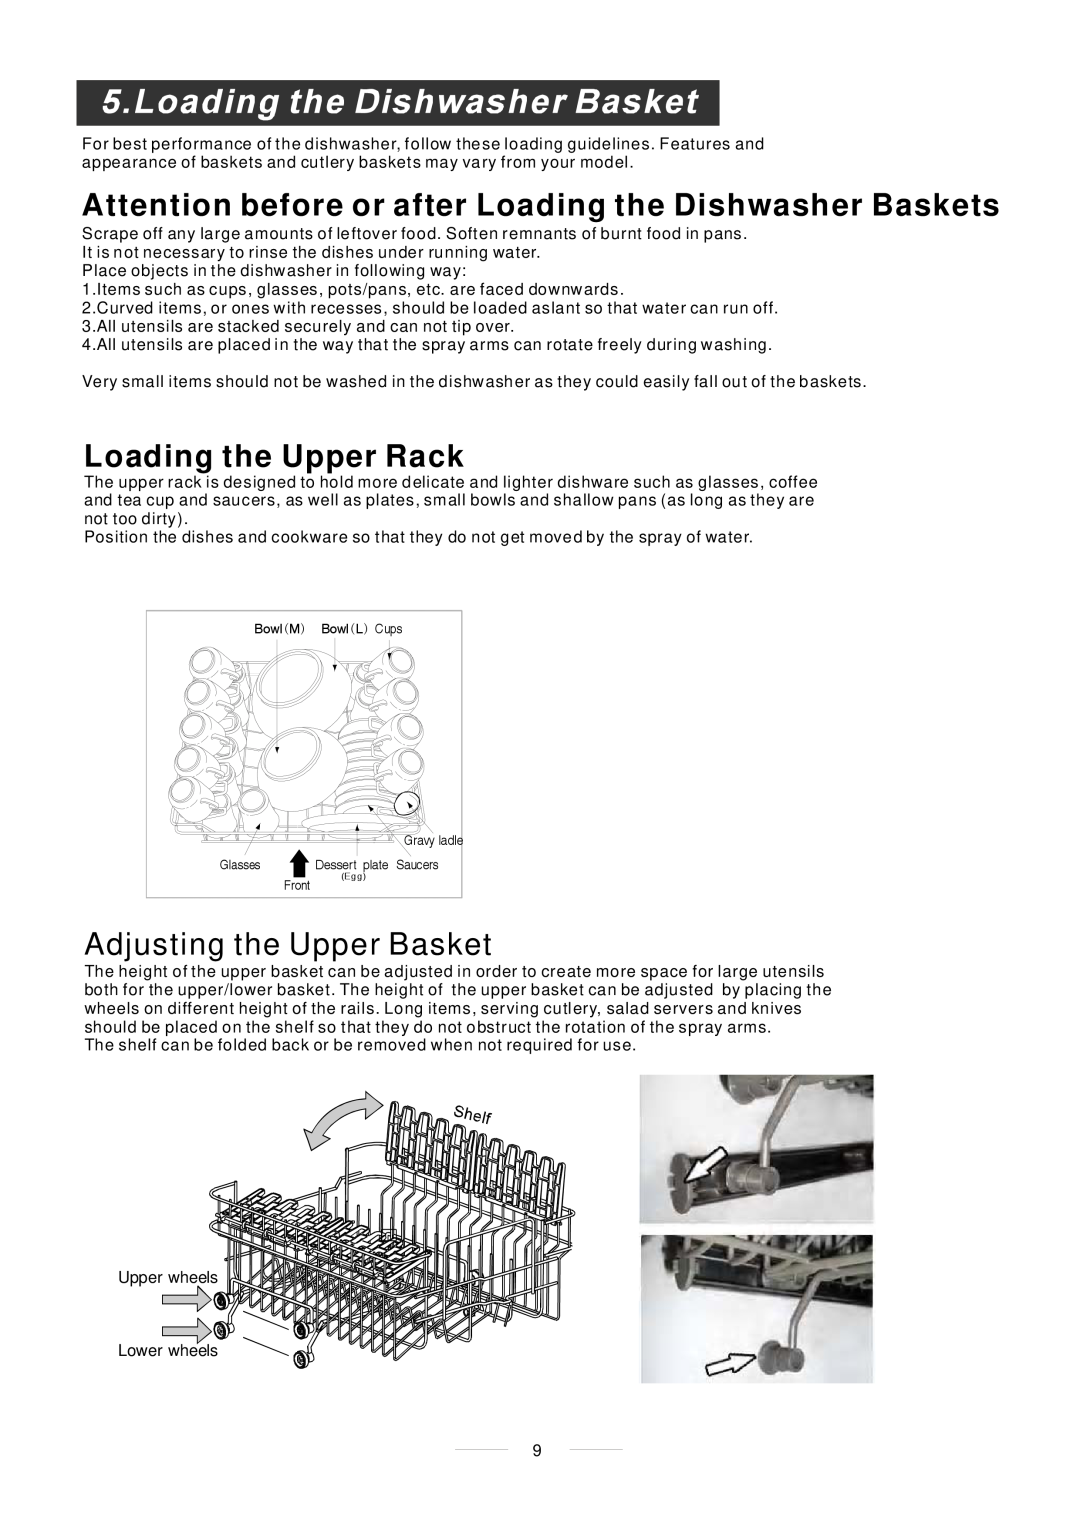 Whirlpool ADP 451 manual Loading the Upper Rack, Adjusting the Upper Basket 